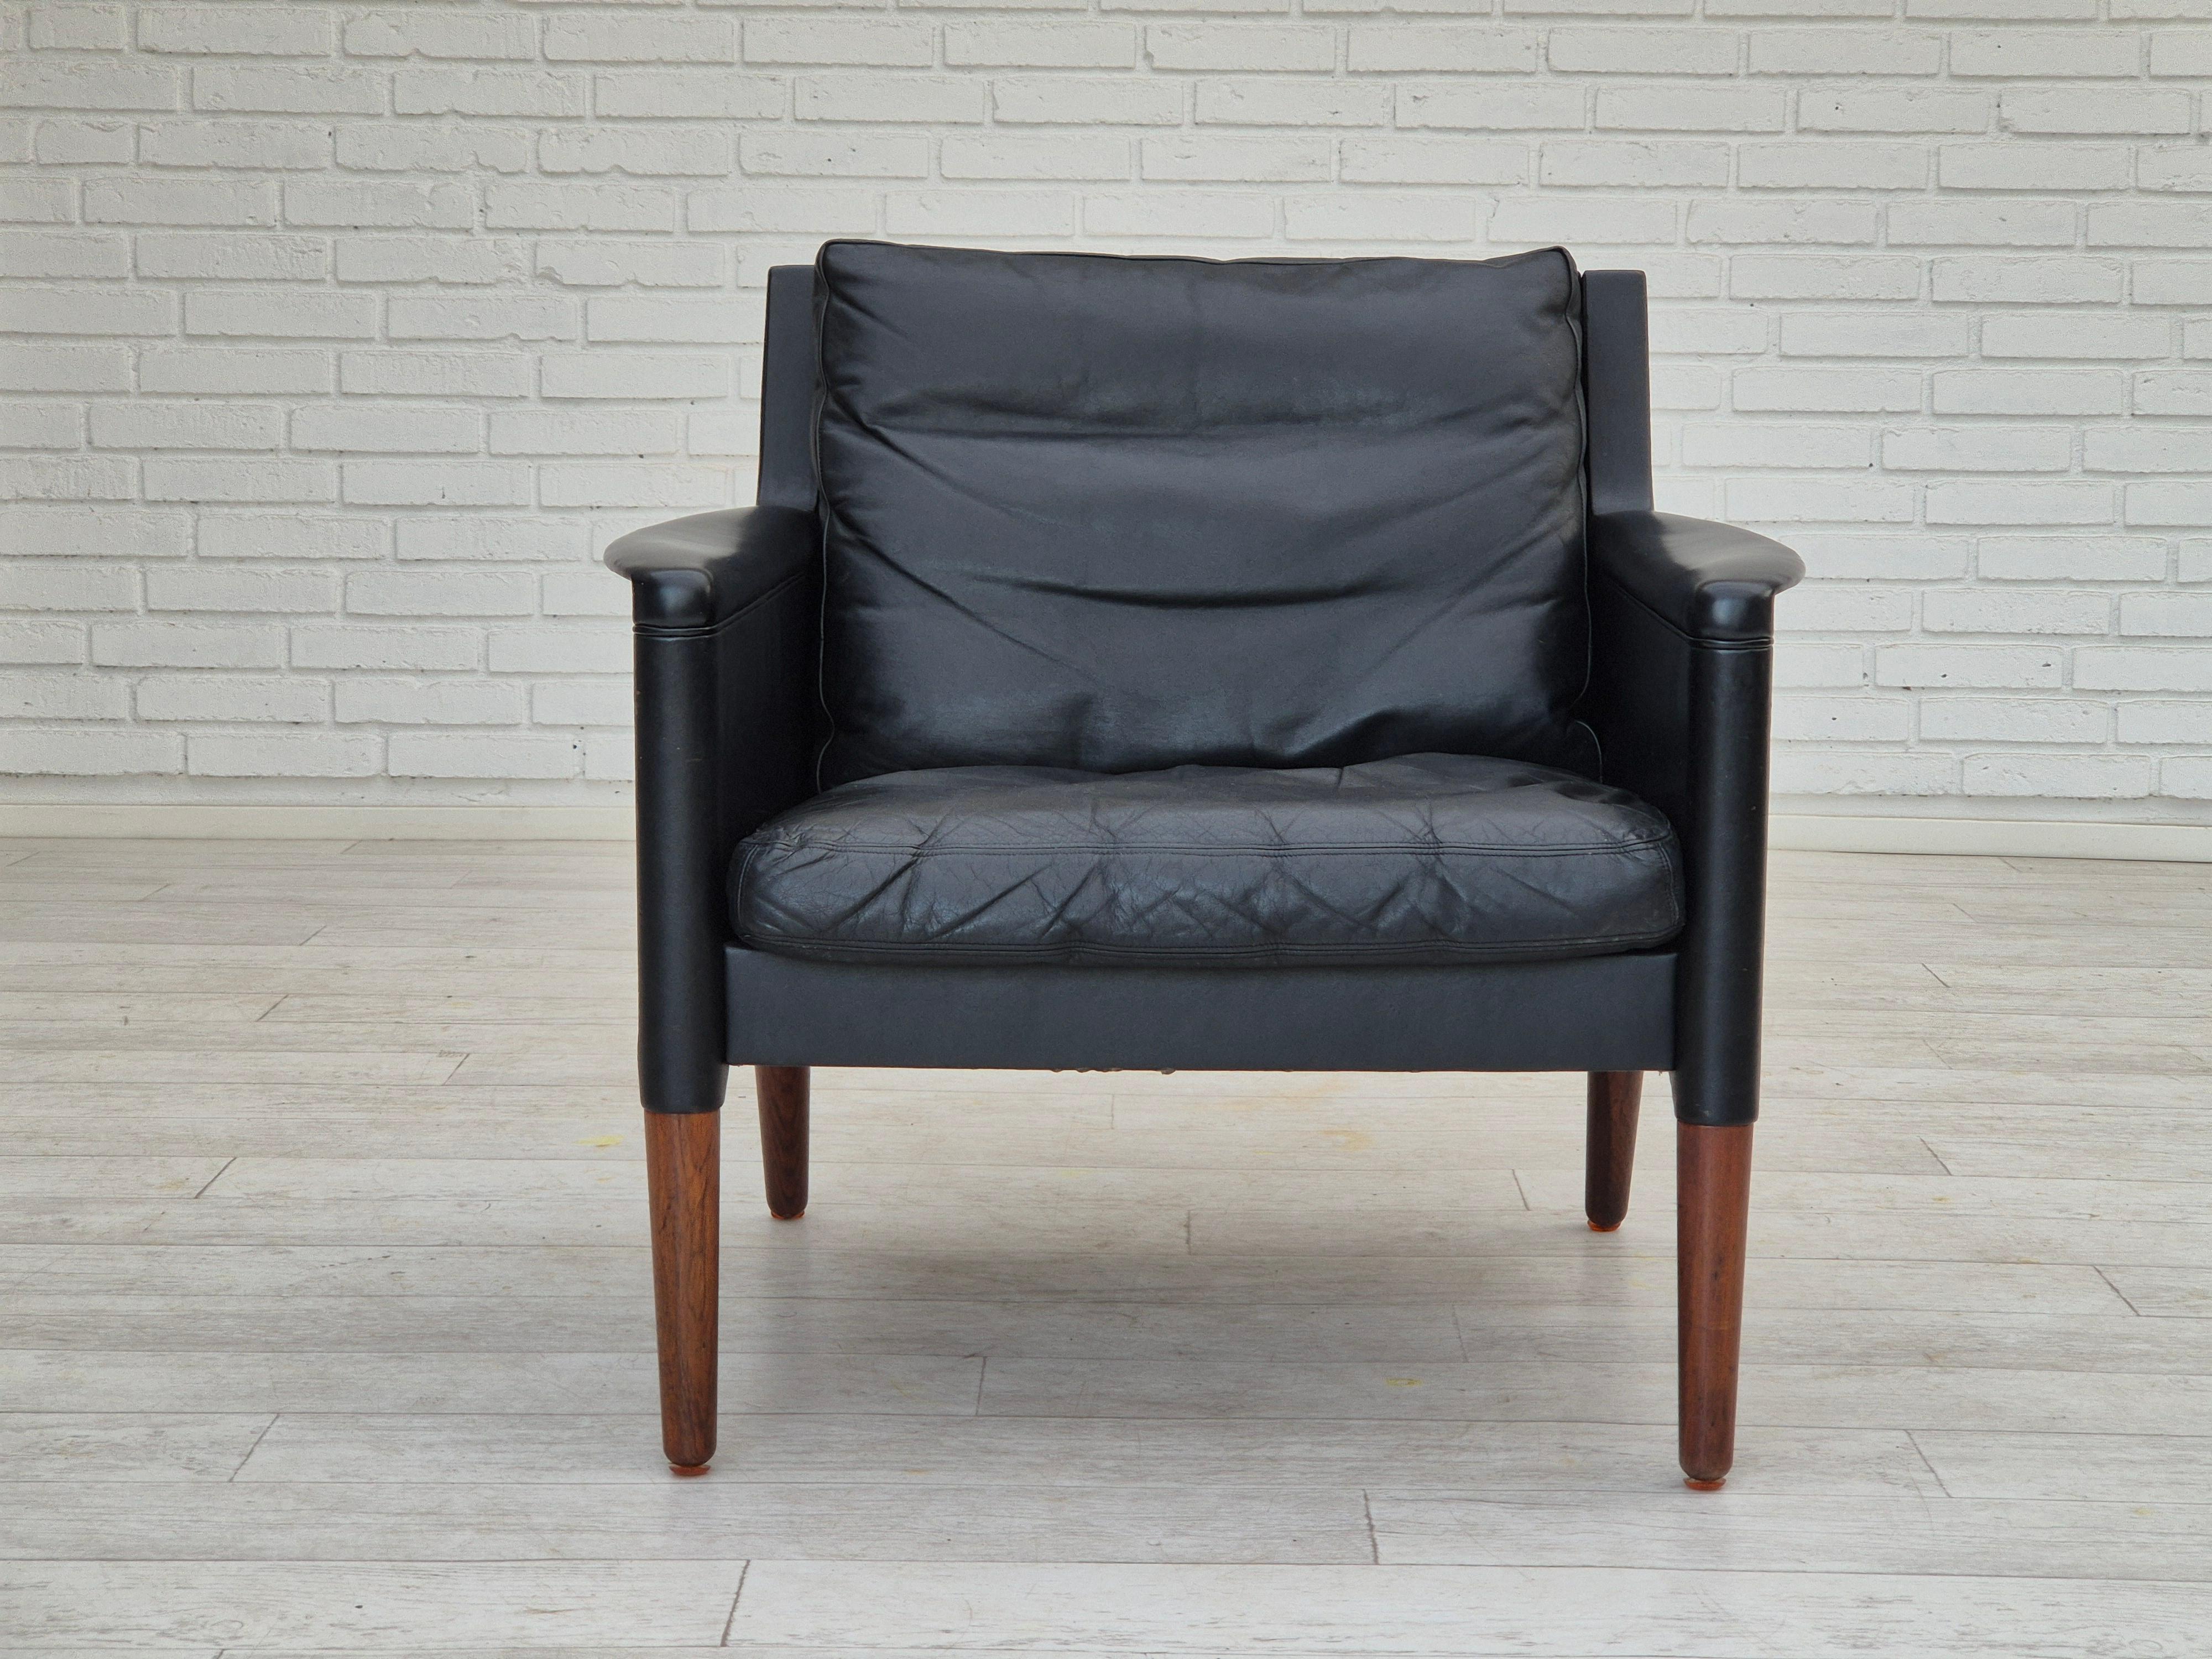 Scandinavian Modern 1960s, Danish design by Kurt Østervig, lounge chair model 55, leather, rosewood. For Sale